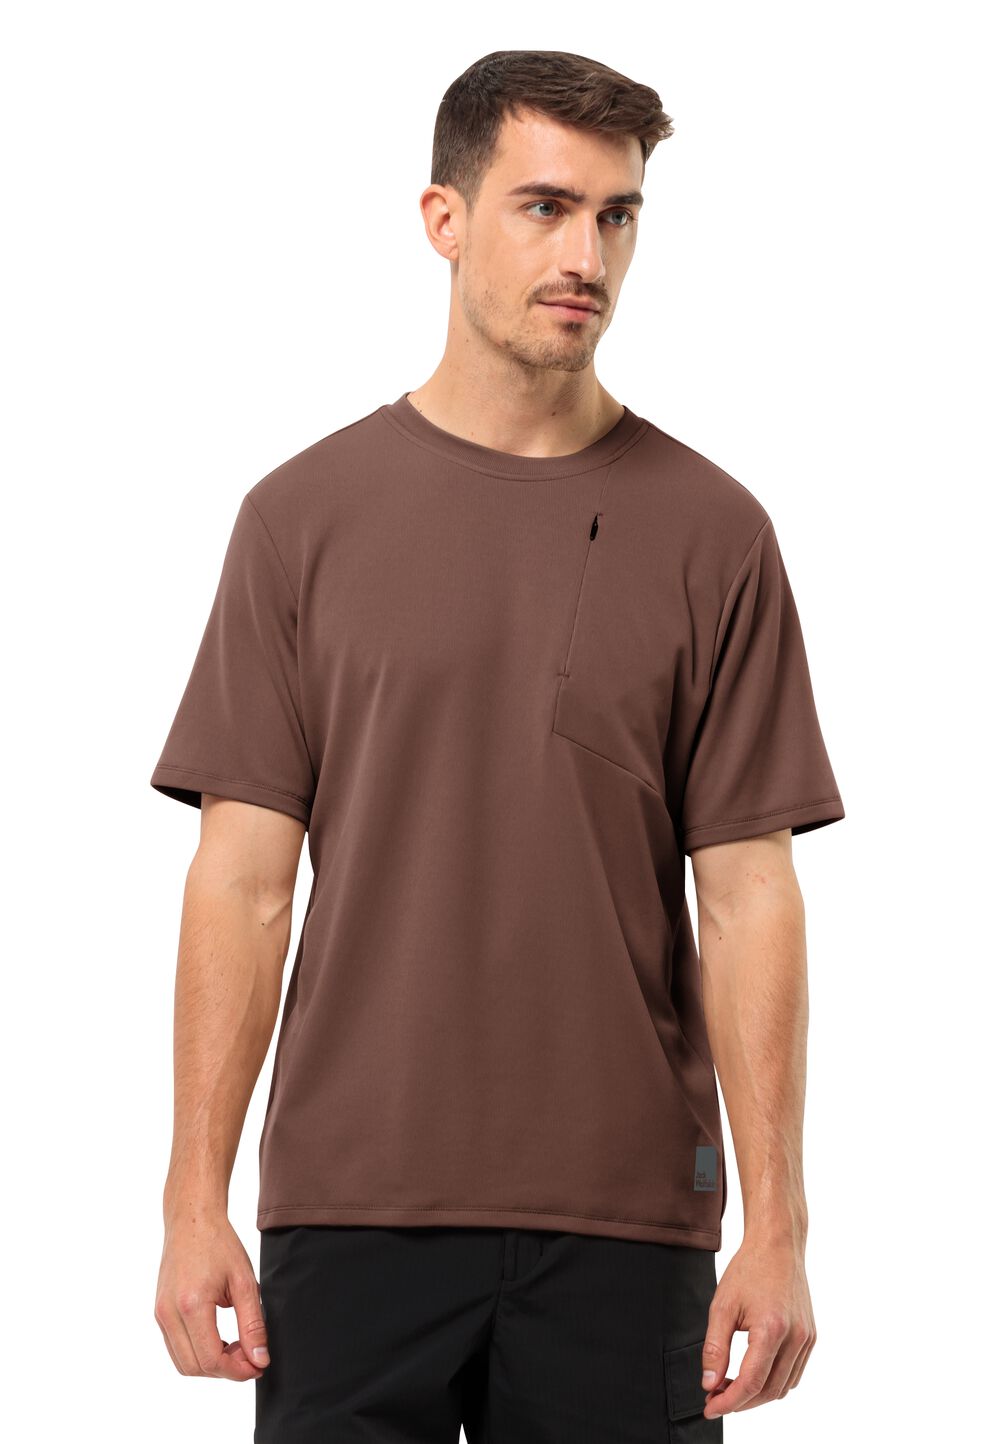 Jack Wolfskin Bike Commute T-Shirt Men Functioneel shirt Heren M bruin dark rust